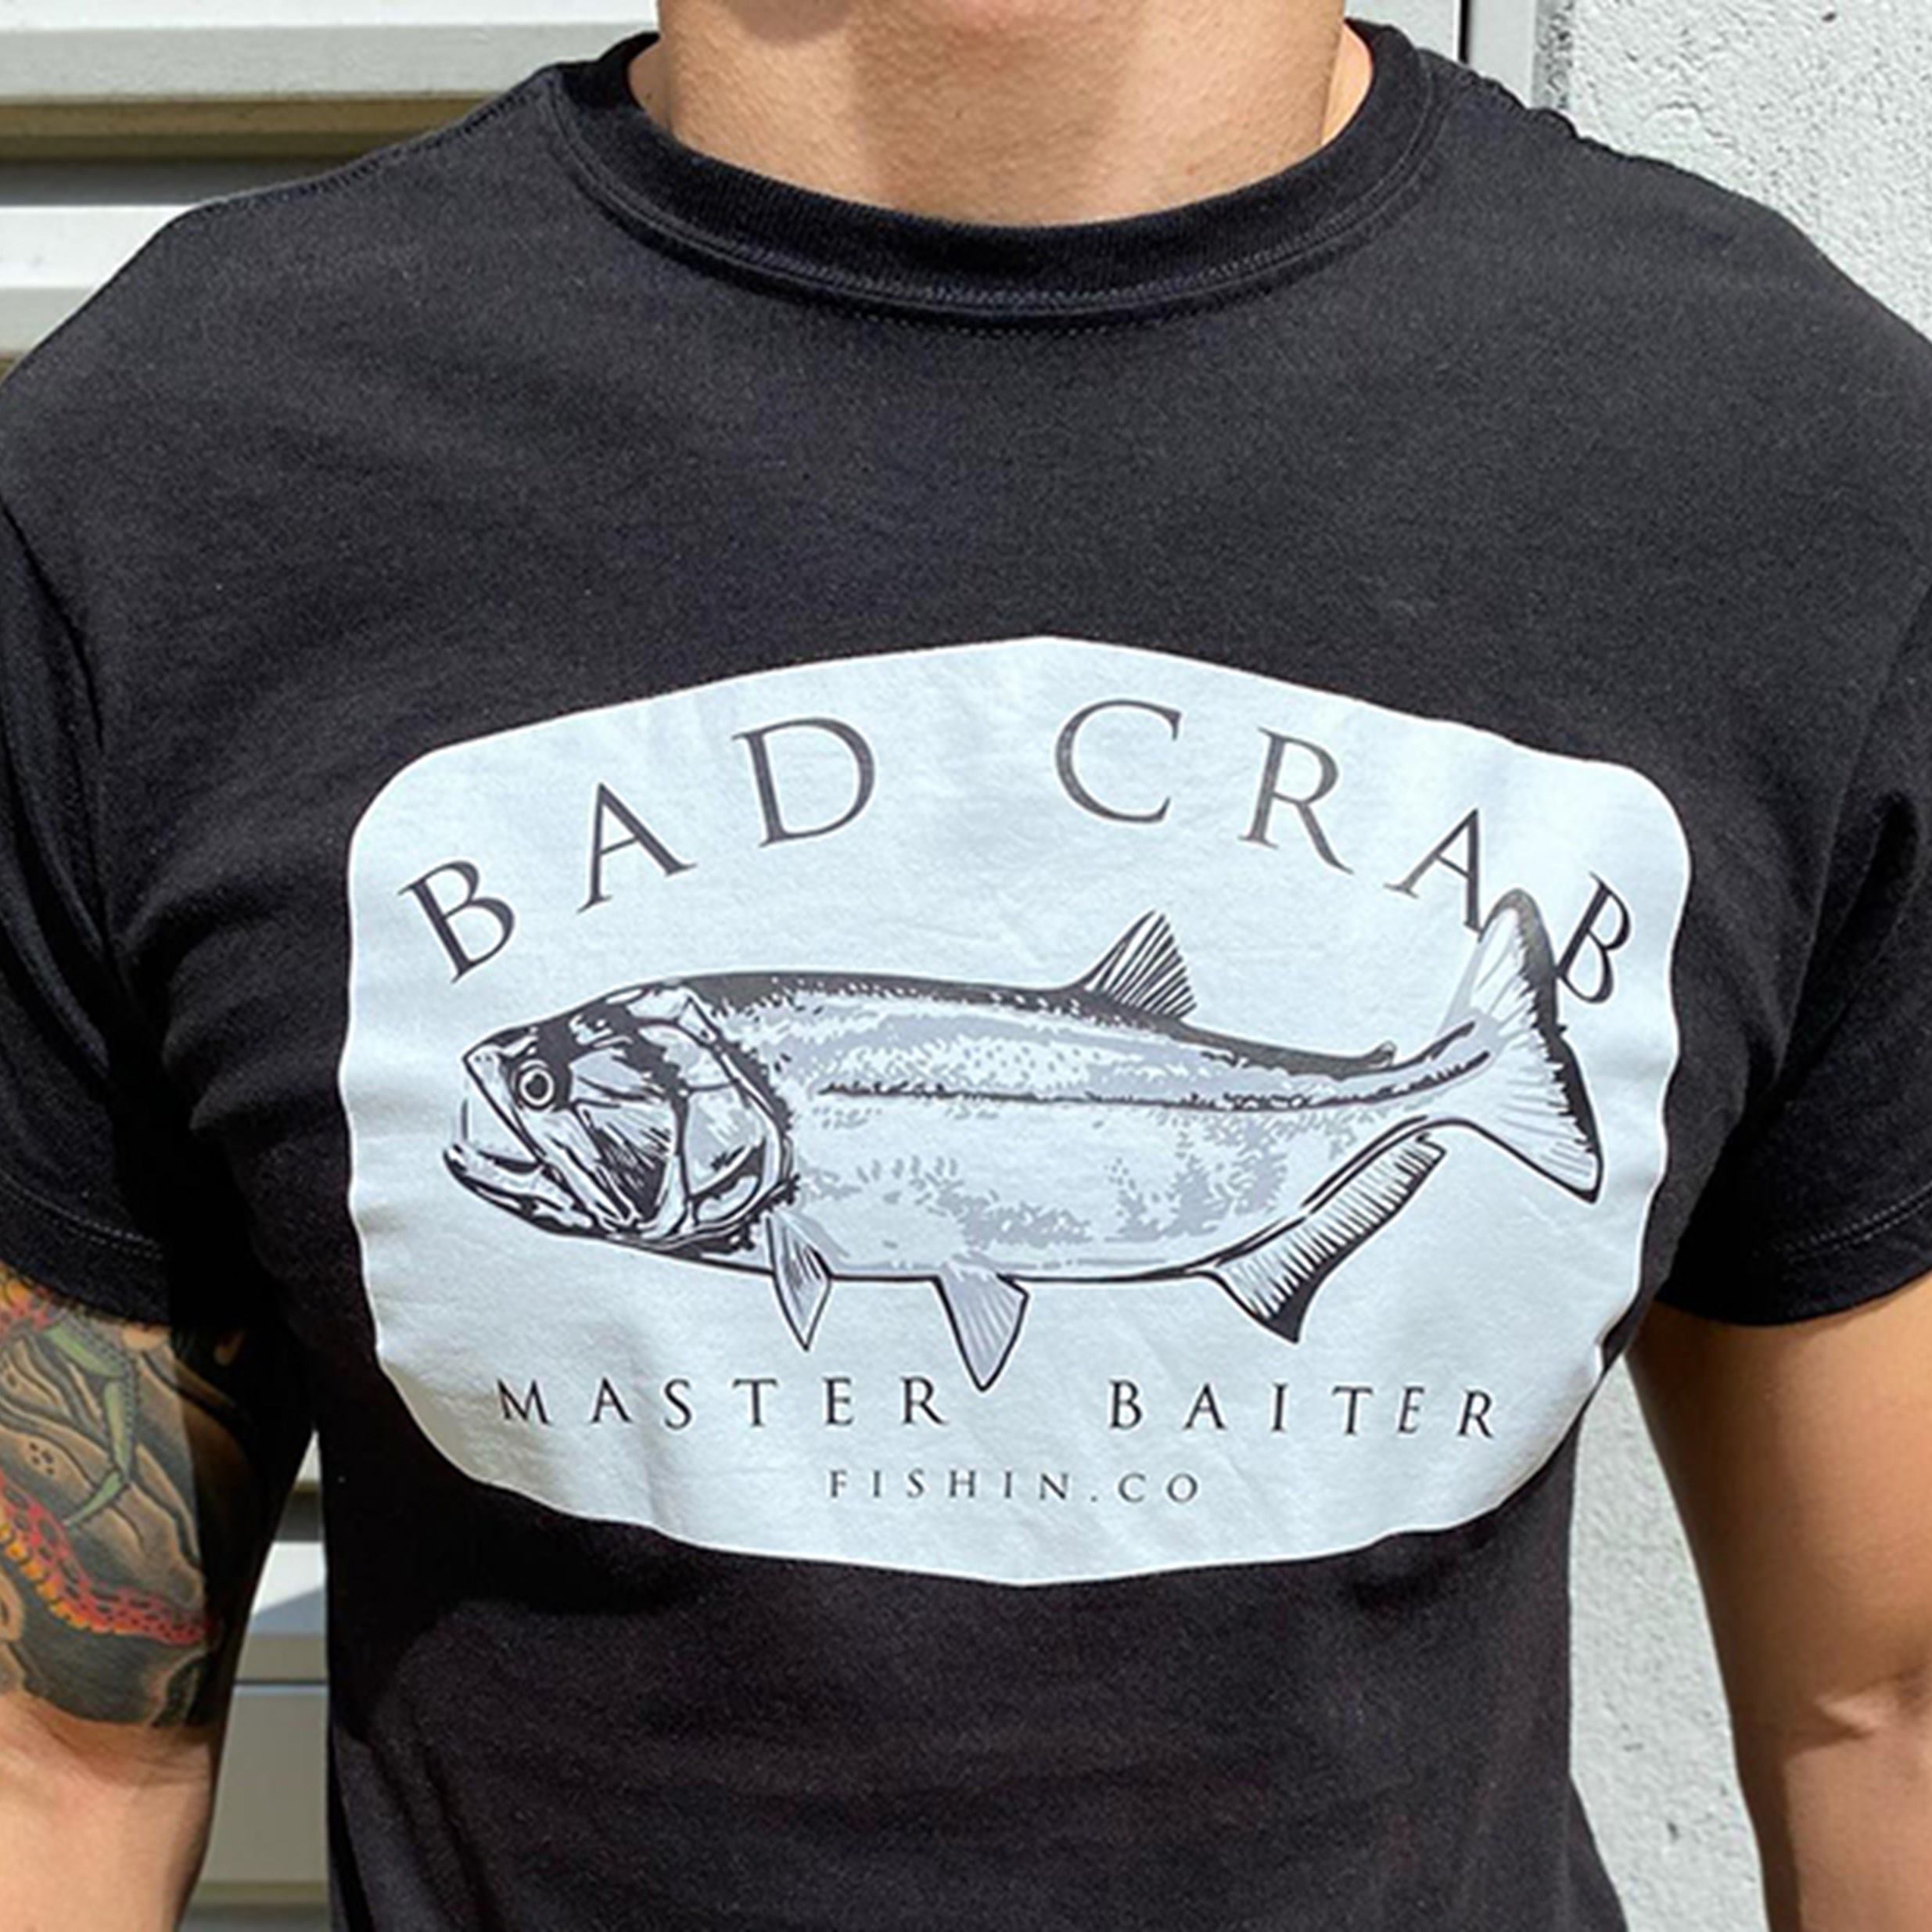 hombre-camiseta-pesca-badcrab